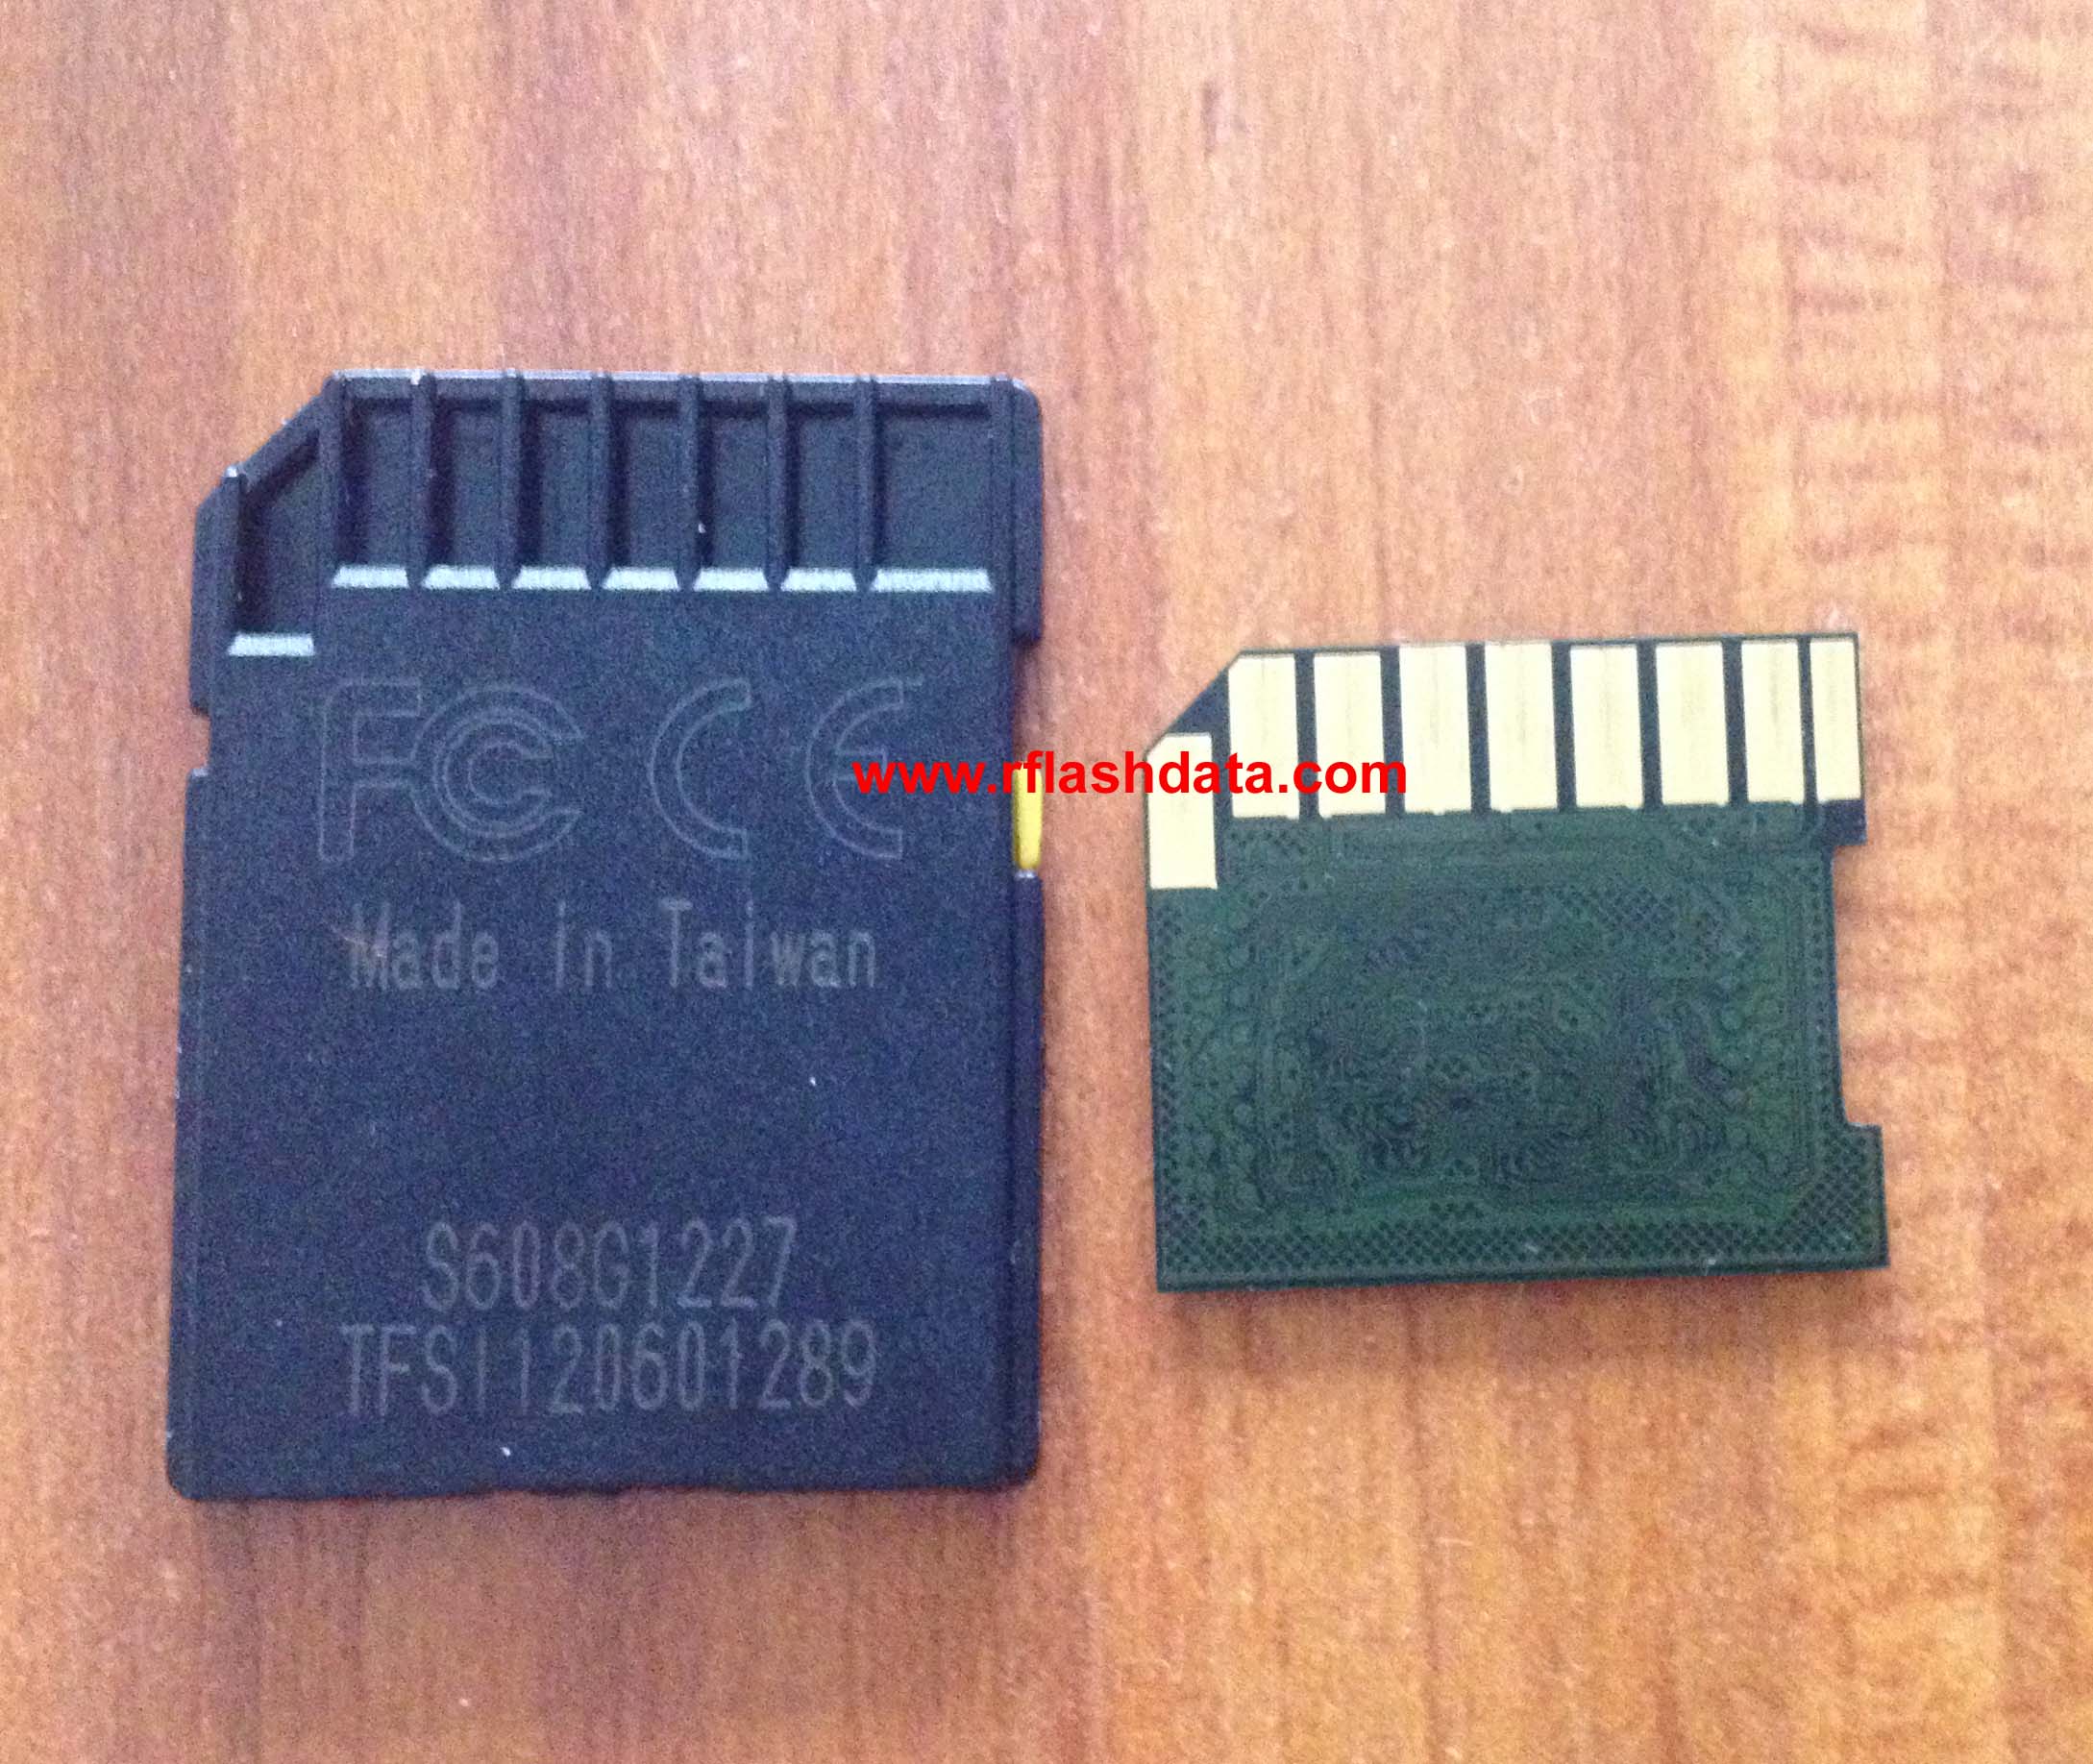 KINGSTON SDHC memory card data recovery